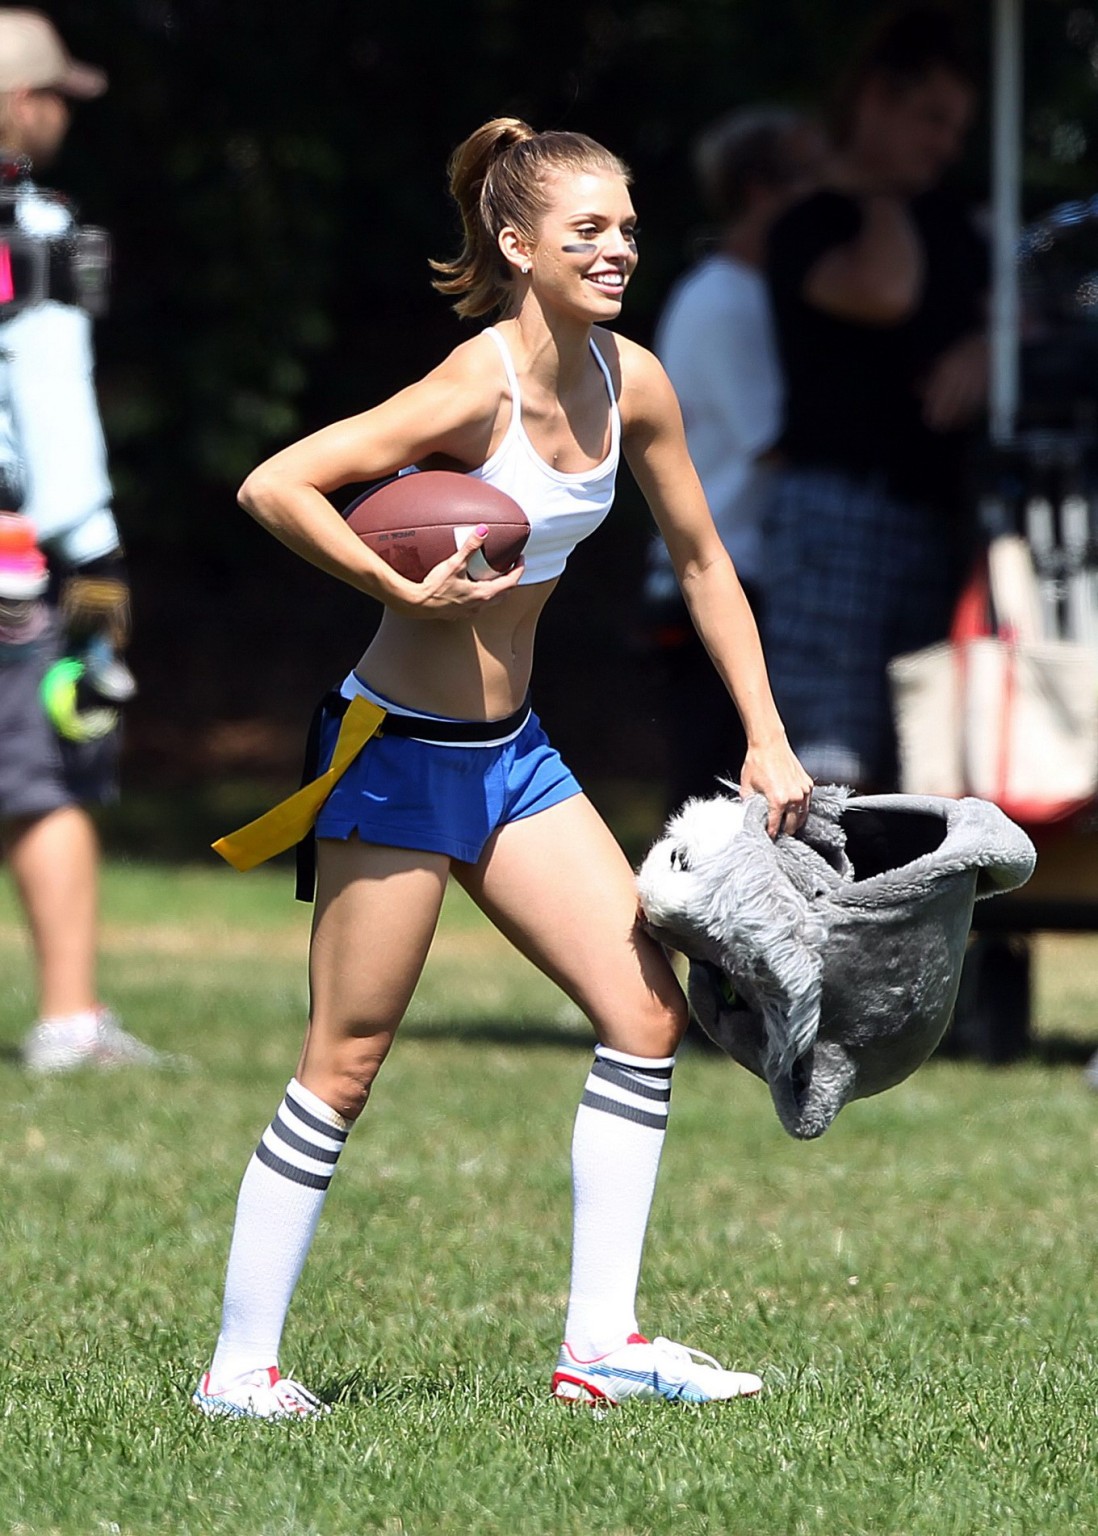 Annalynne mccord trägt bauchfreie Shorts bei '90210'-Darstellung in la
 #75251696